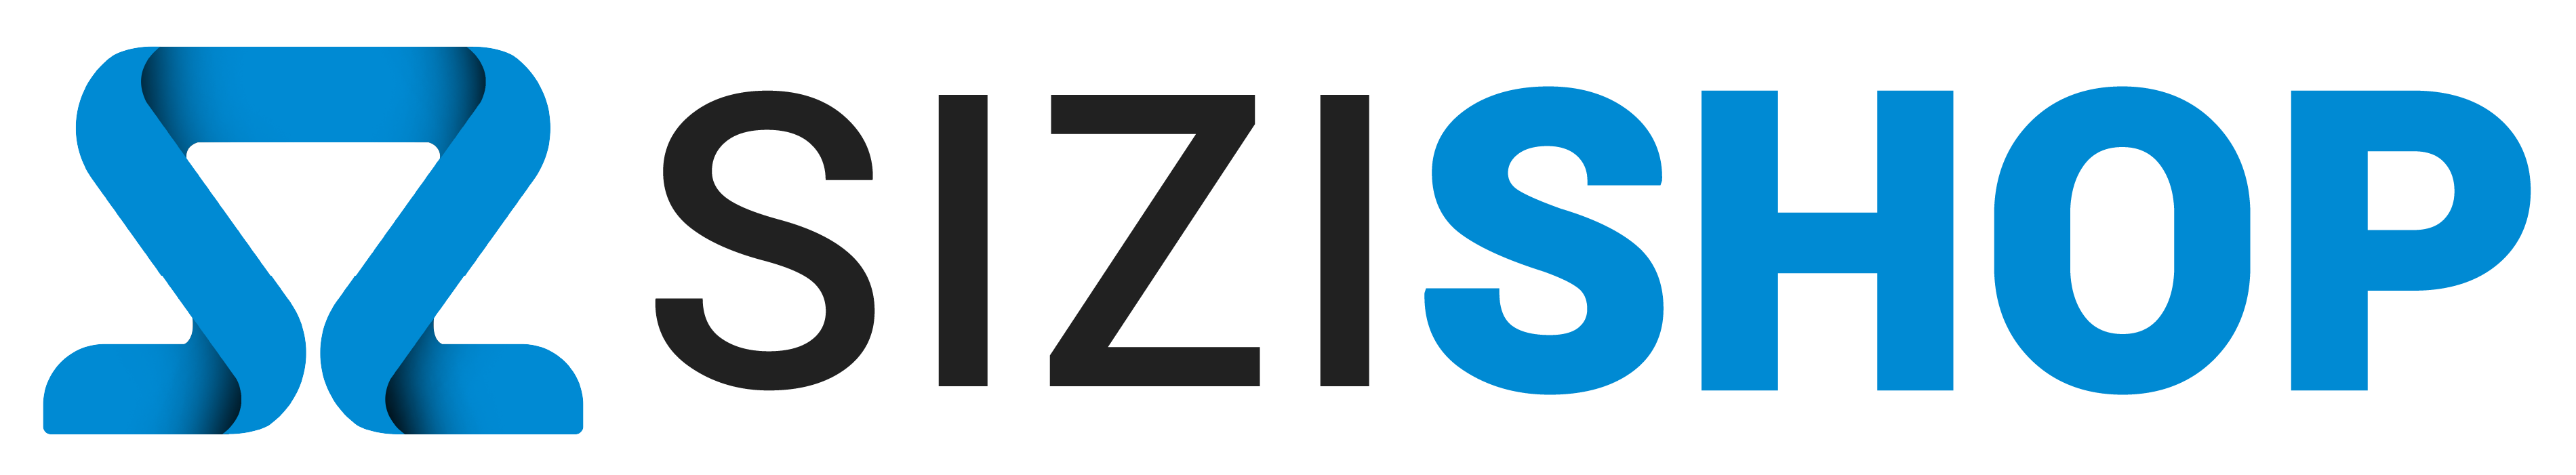 SiziShop